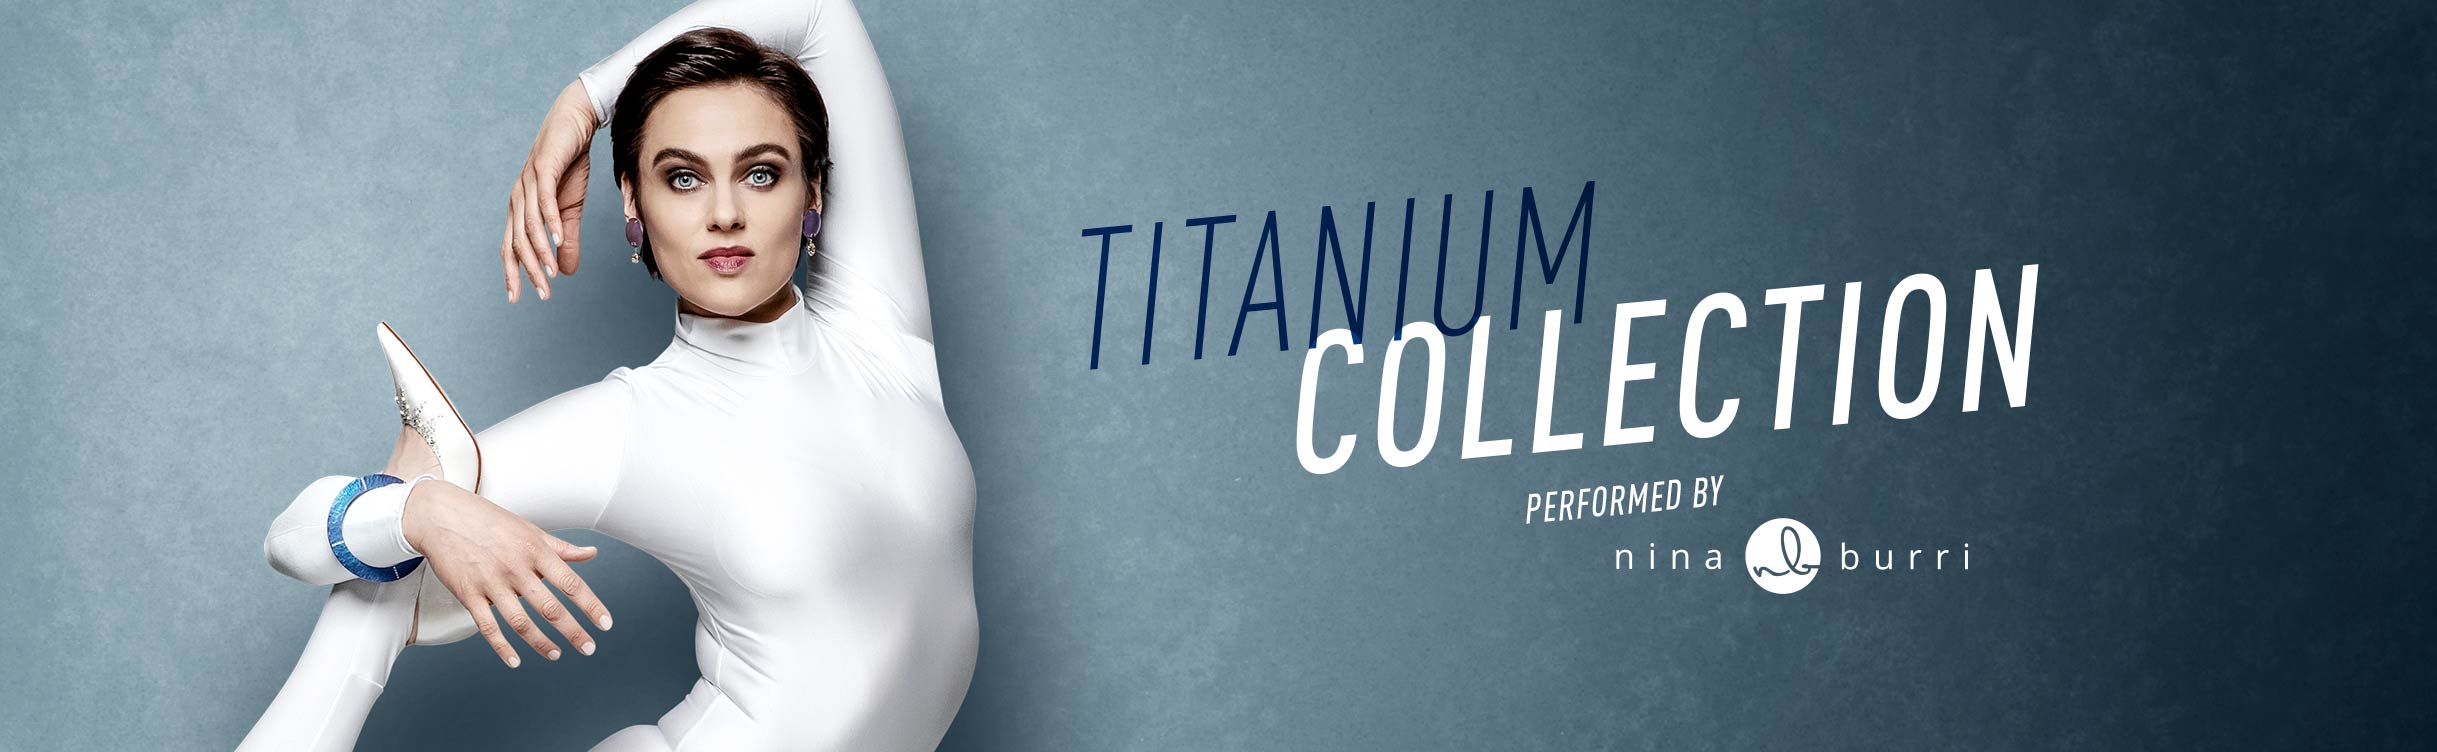 10-Titanium-Collection-banner